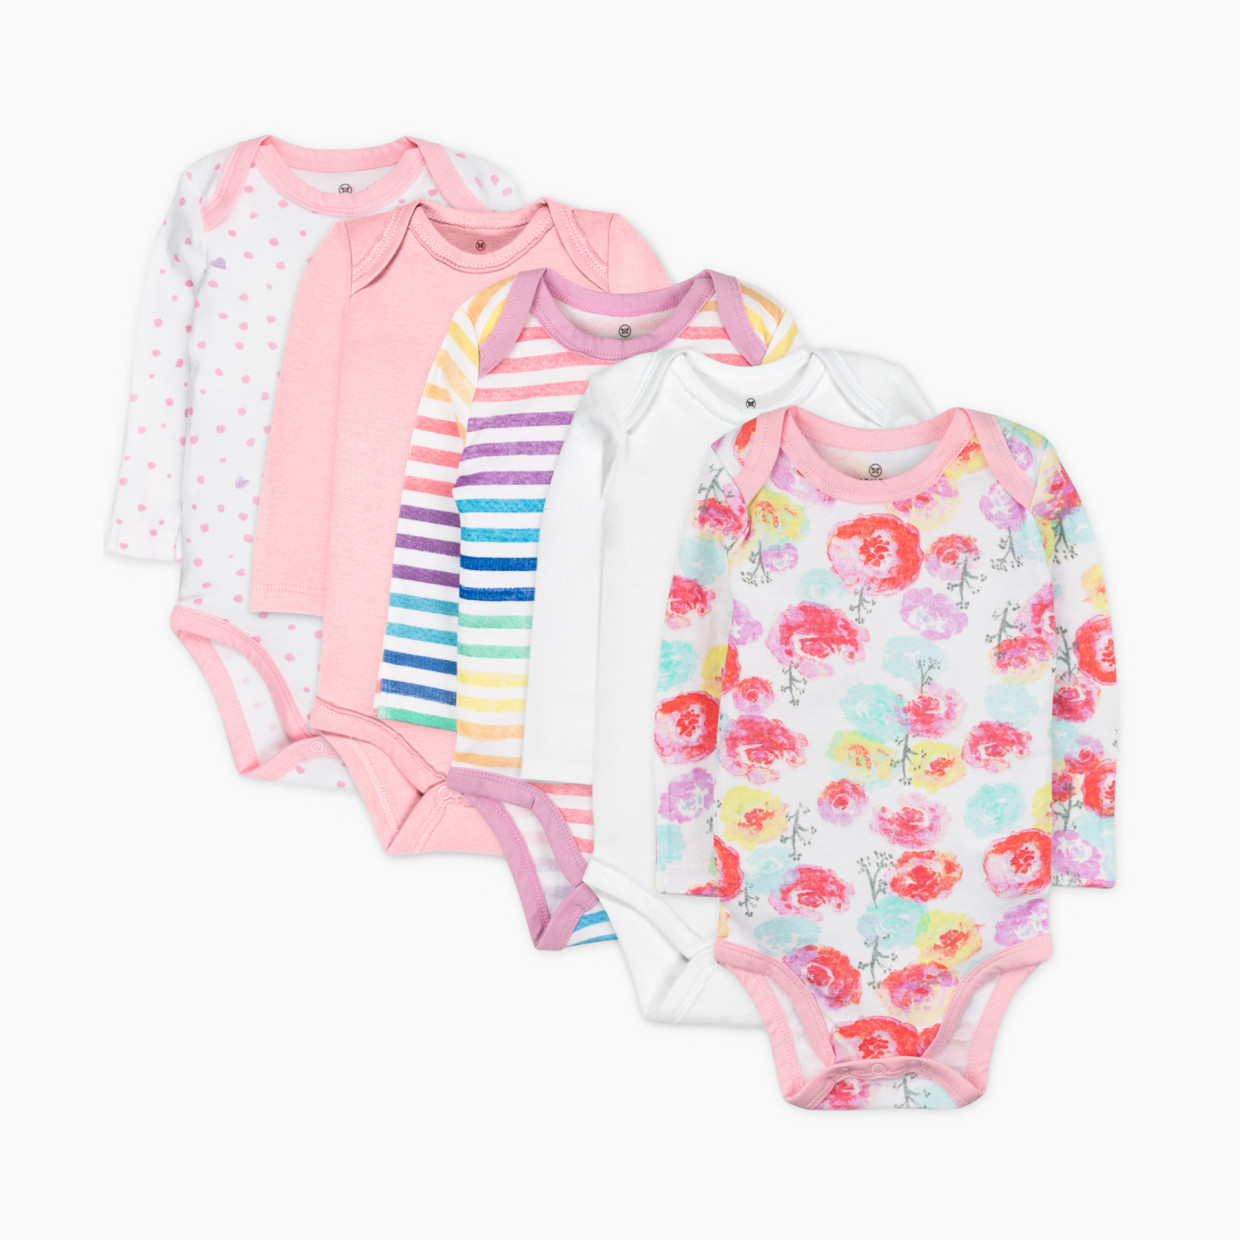 Honest Baby Clothing 5-Pack Organic Cotton Long Sleeve Bodysuit - Rose Blossom, 0-3 M, 5.